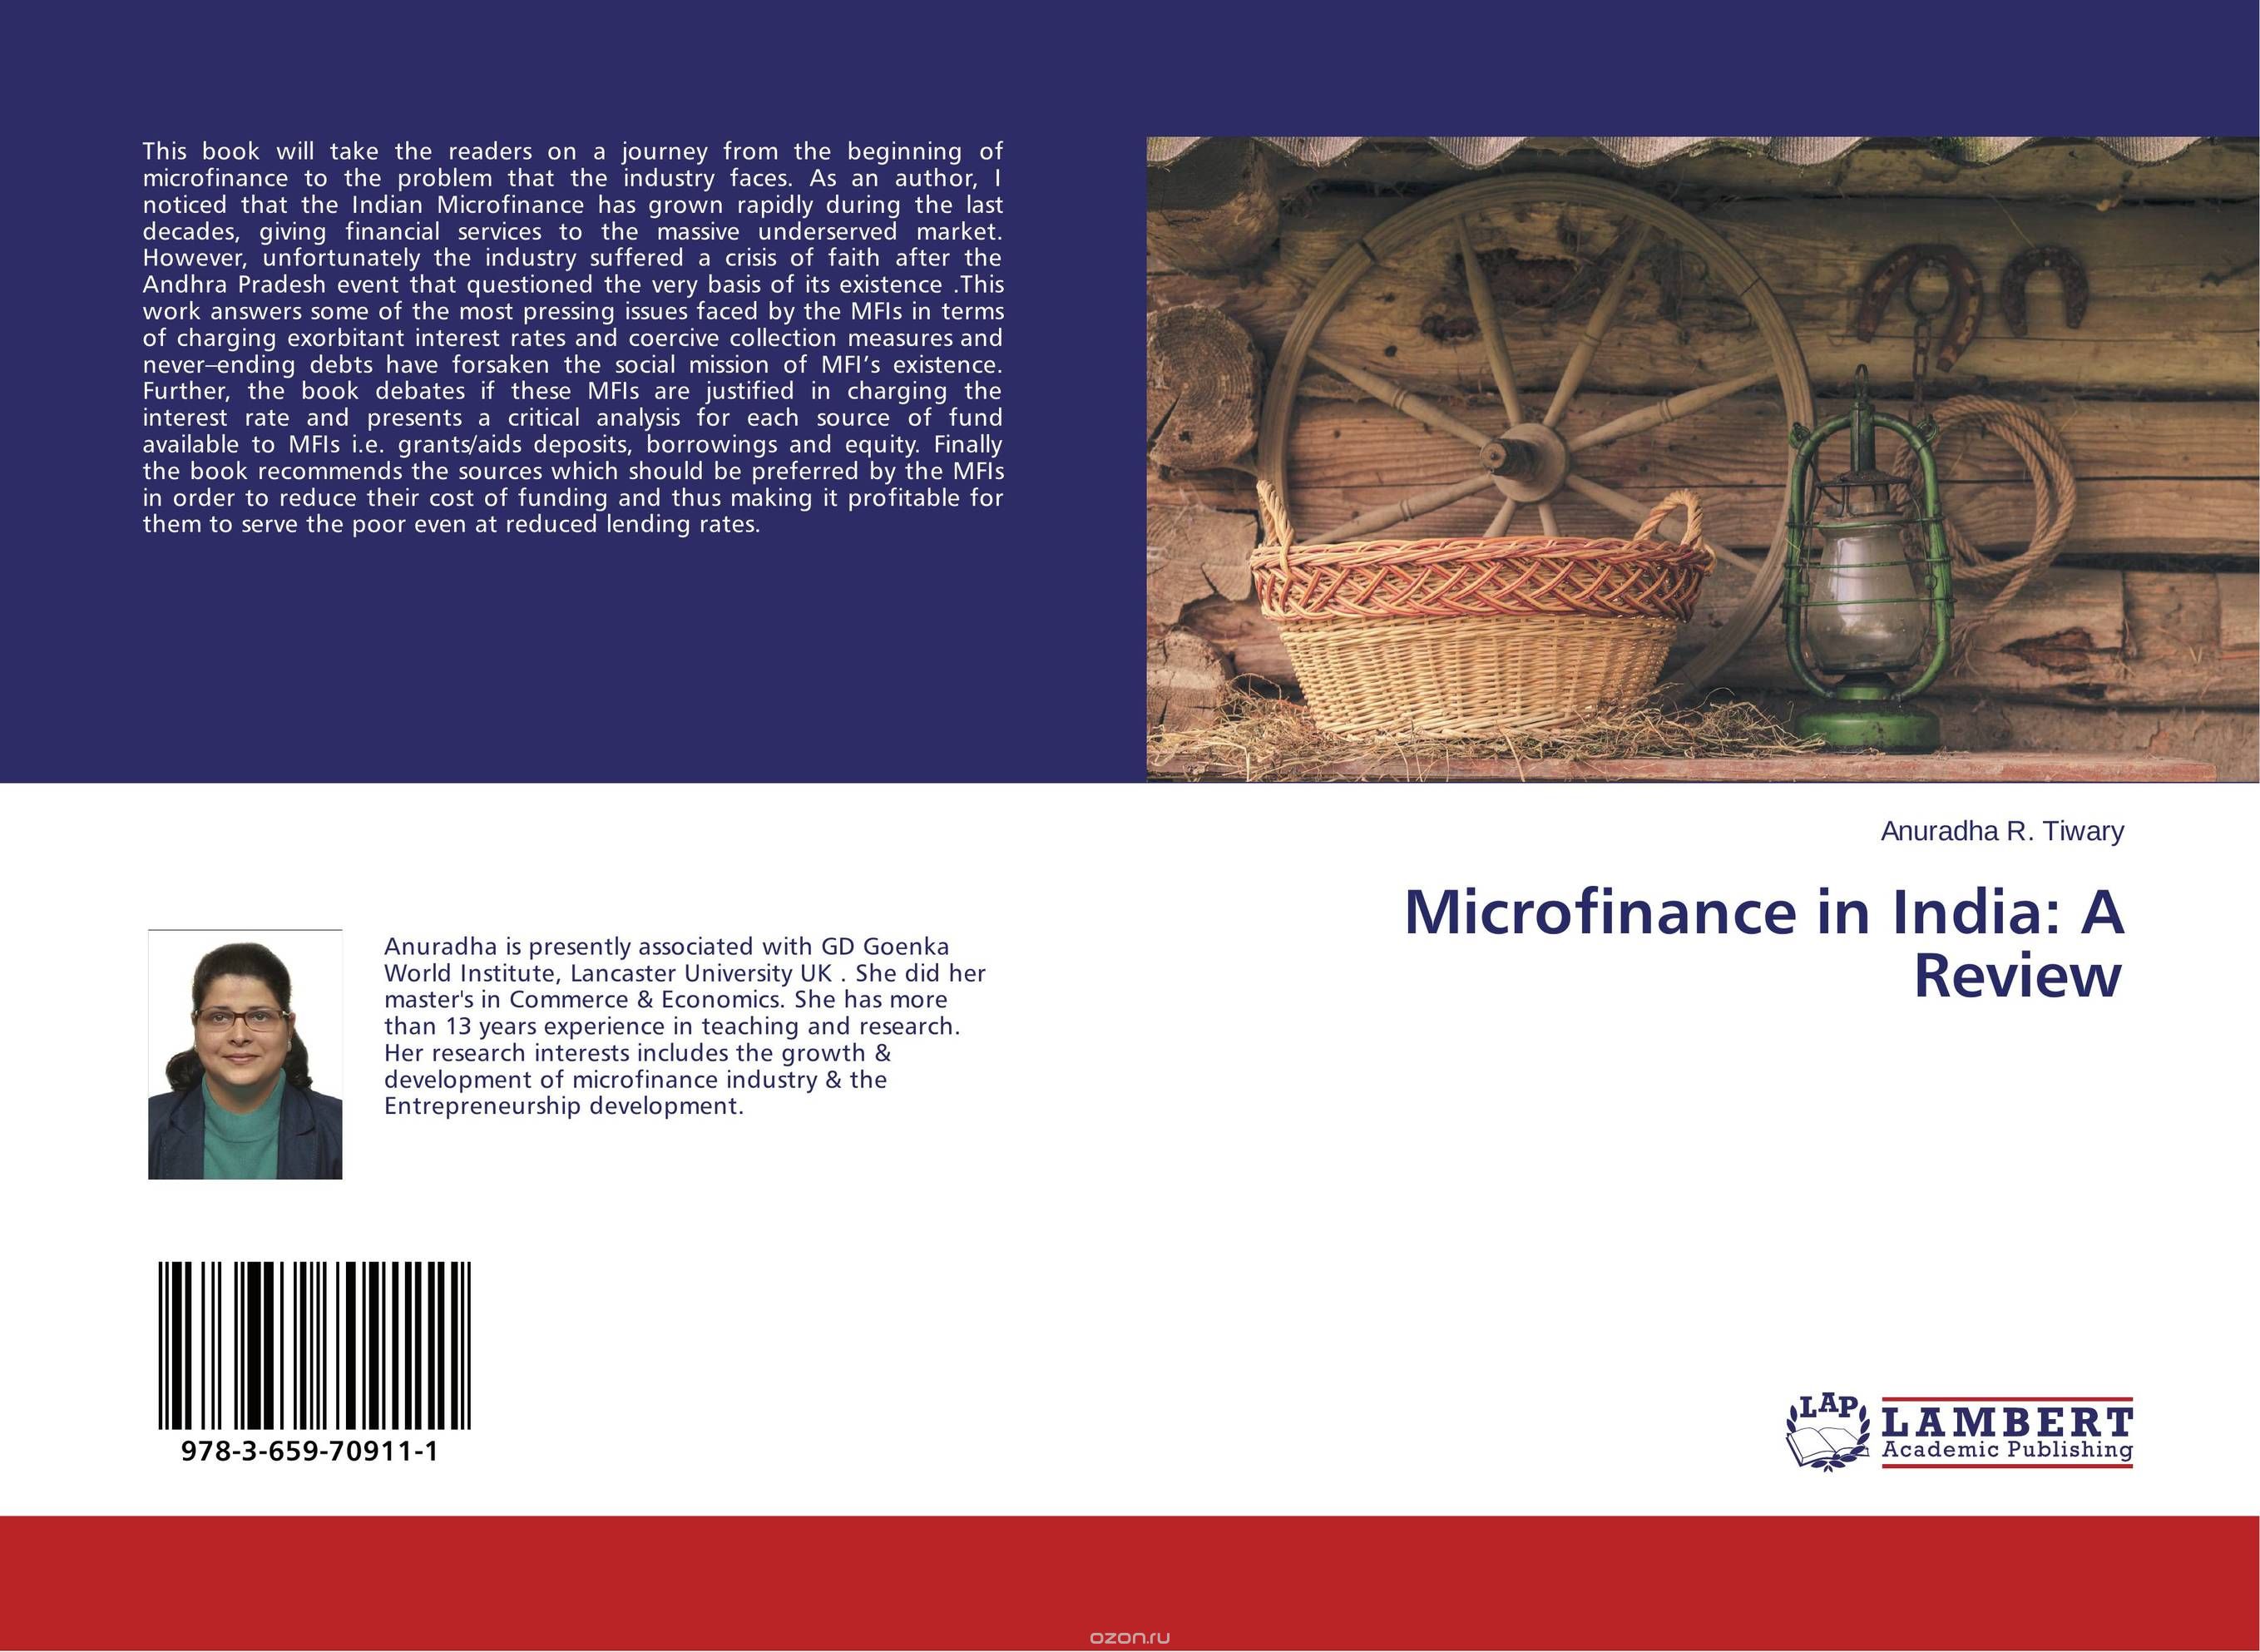 Скачать книгу "Microfinance in India: A Review"